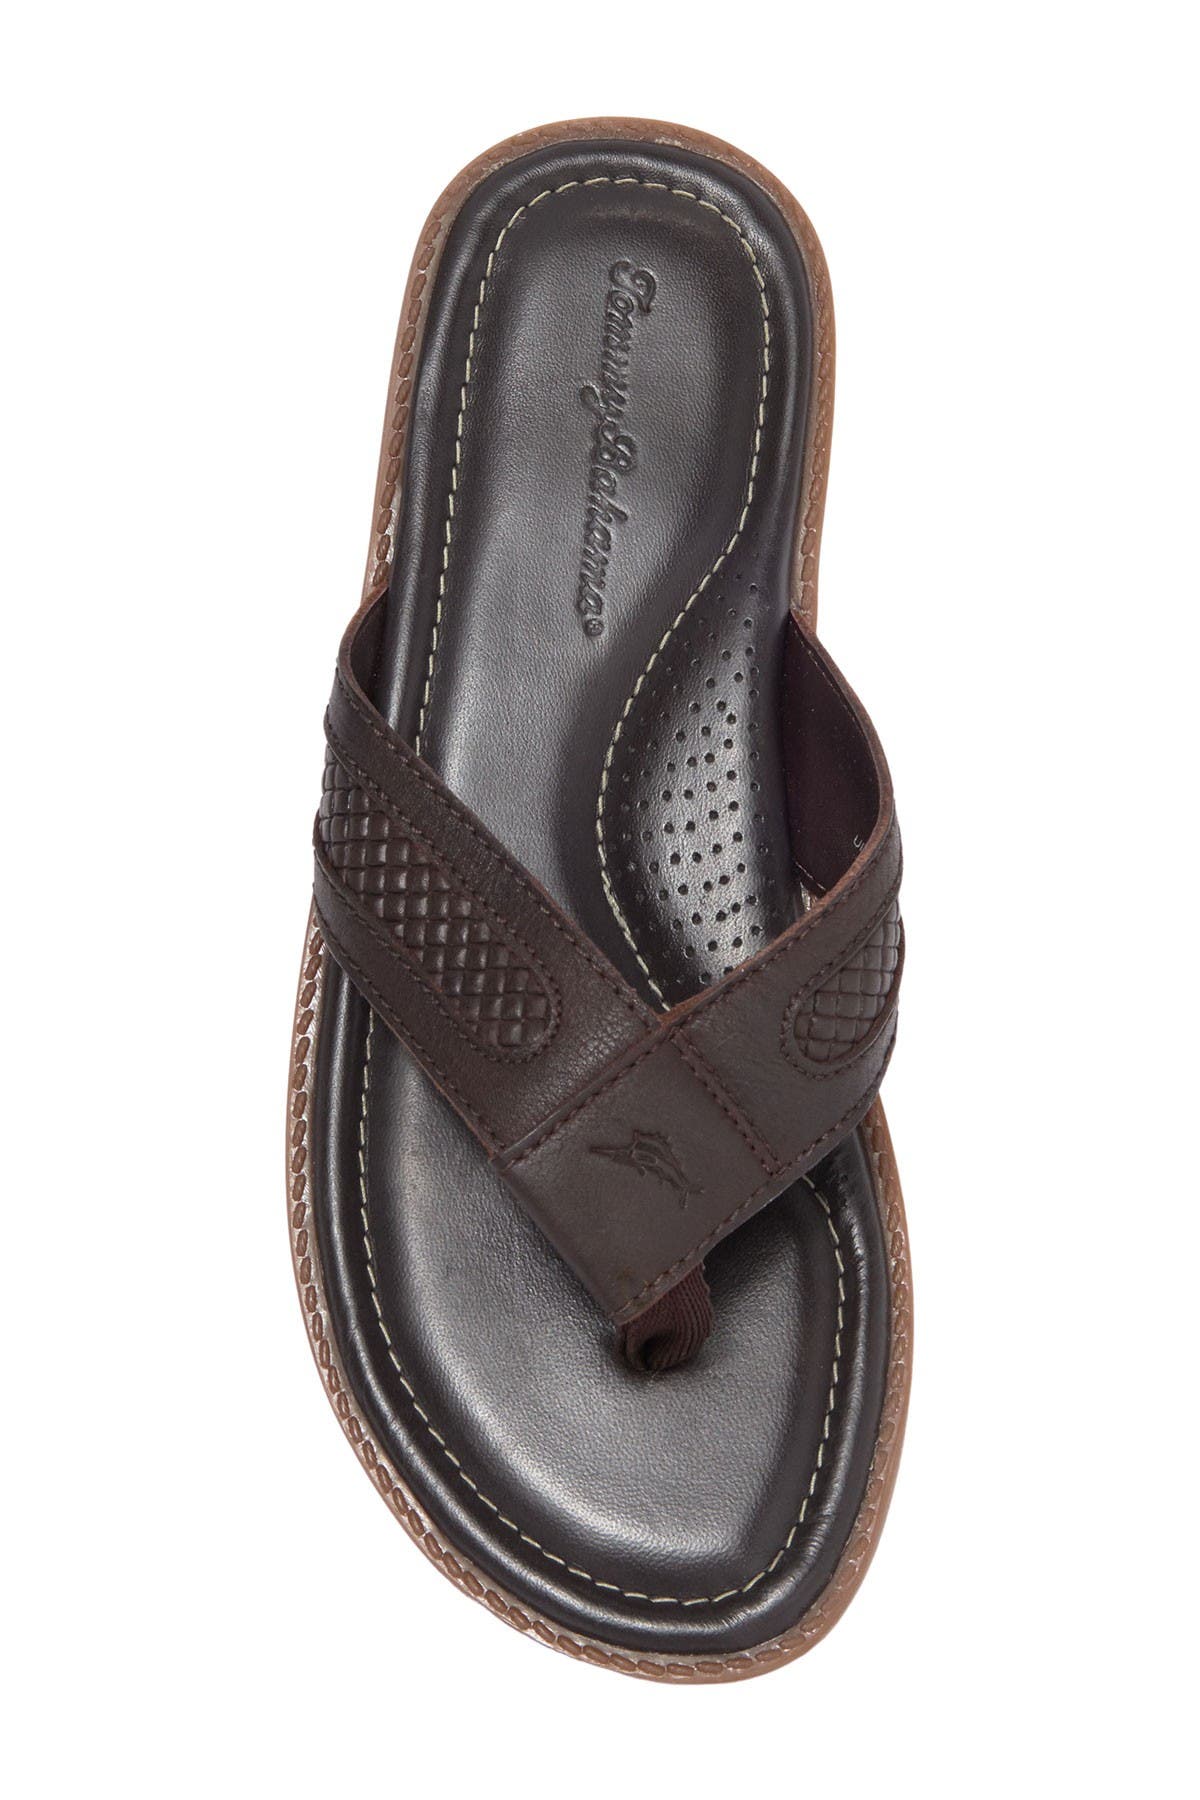 tommy bahama leather flip flops